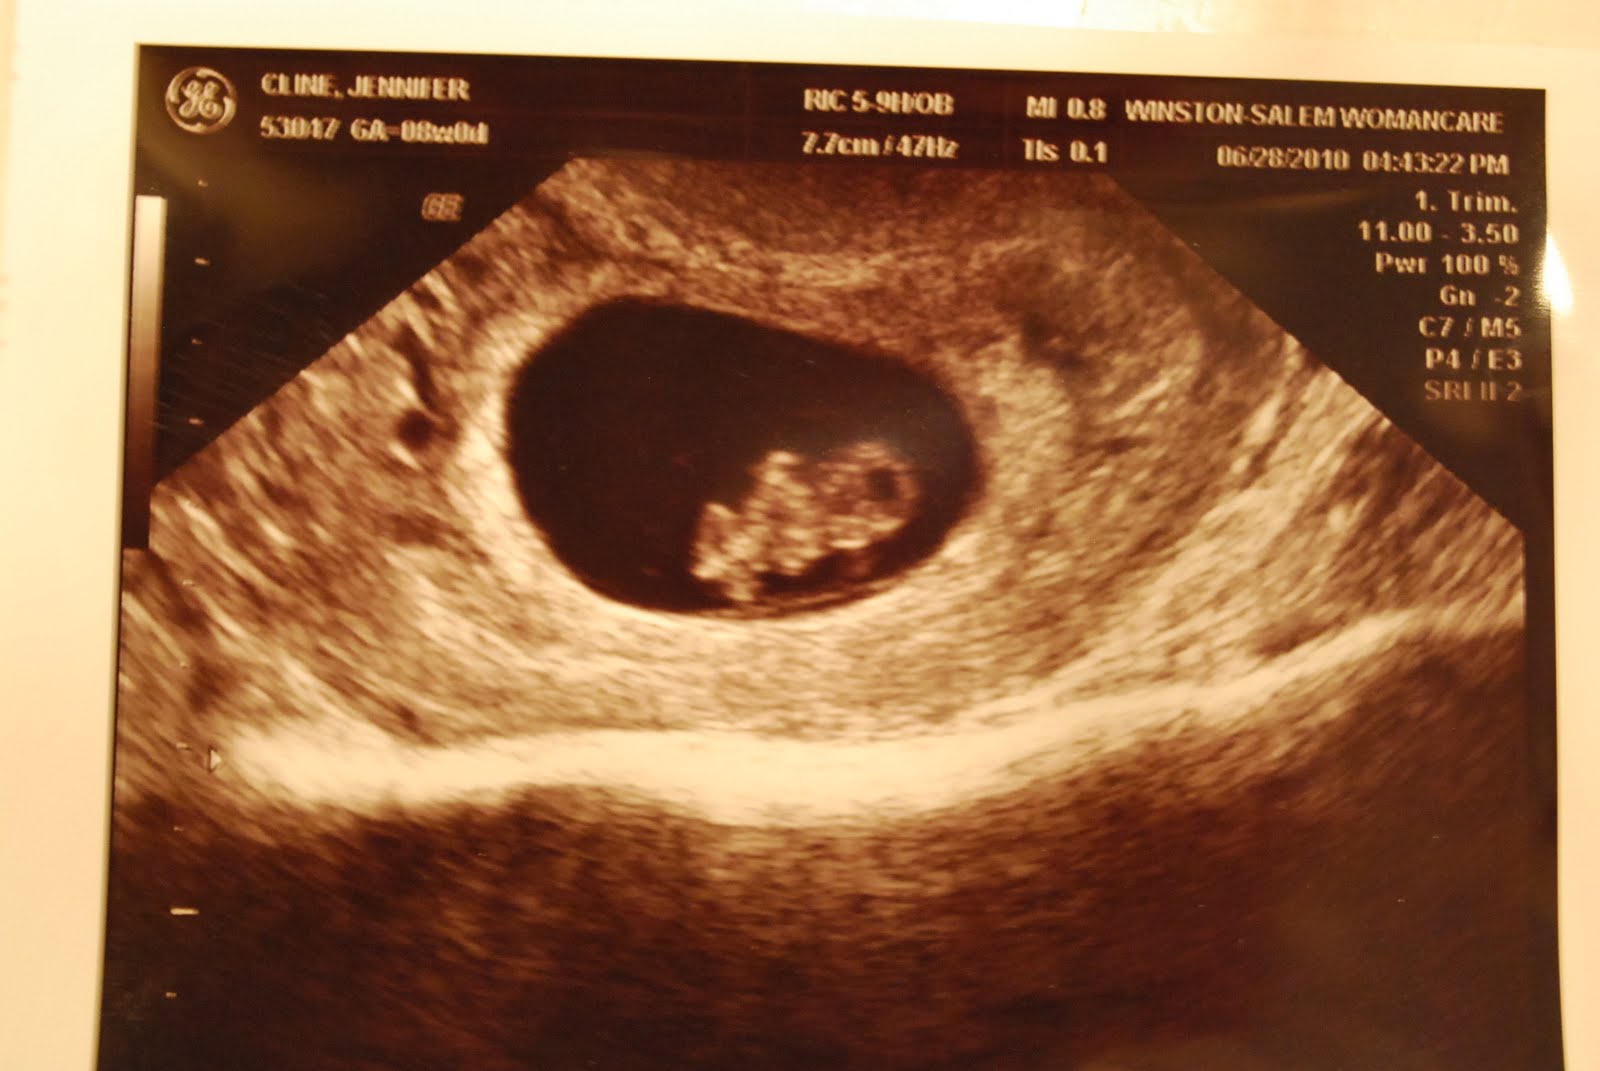 Ребенок ребенка 6 8 недель. 8 Недель беременности фото плода на УЗИ. Фото УЗИ на 8 неделе беременности акушерской. Снимок УЗИ эмбриона на 8 неделе беременности. УЗИ на 8 неделе беременности акушерской.